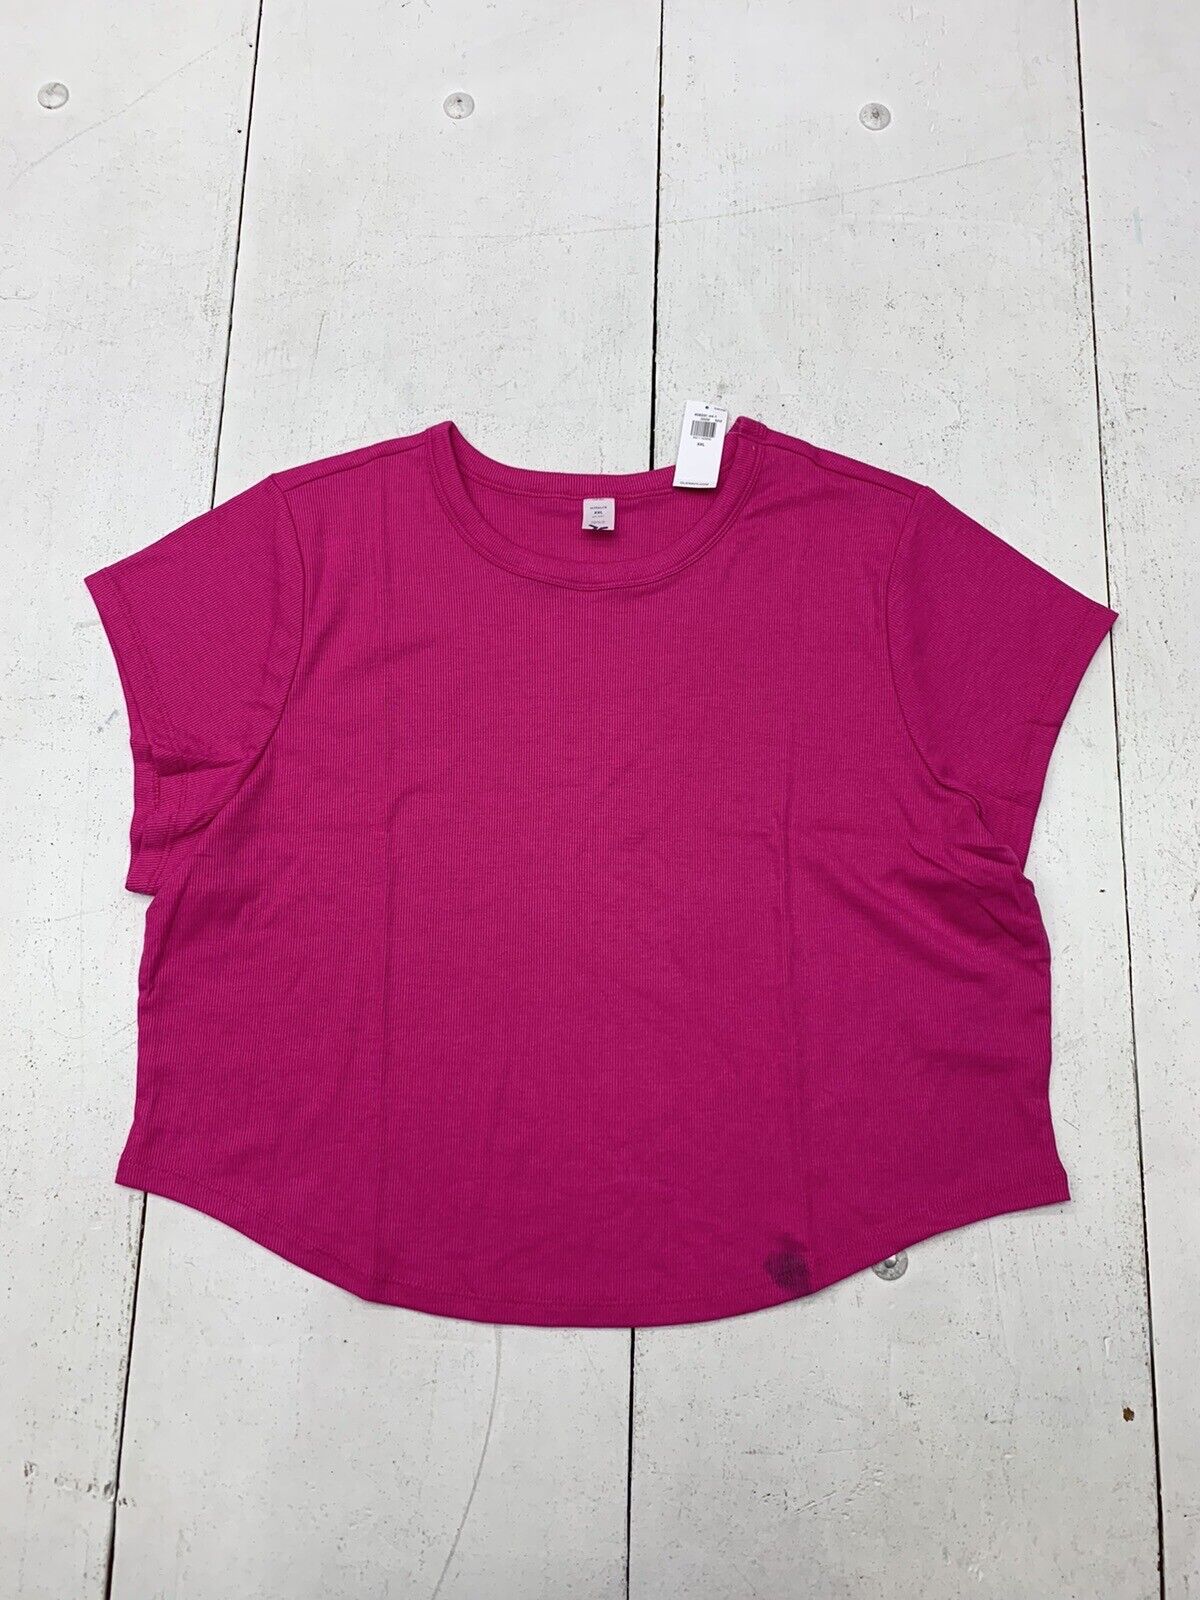 Chicos Pink 3/4 Sleeve Knit Lightweight Sweater Women's Size 0